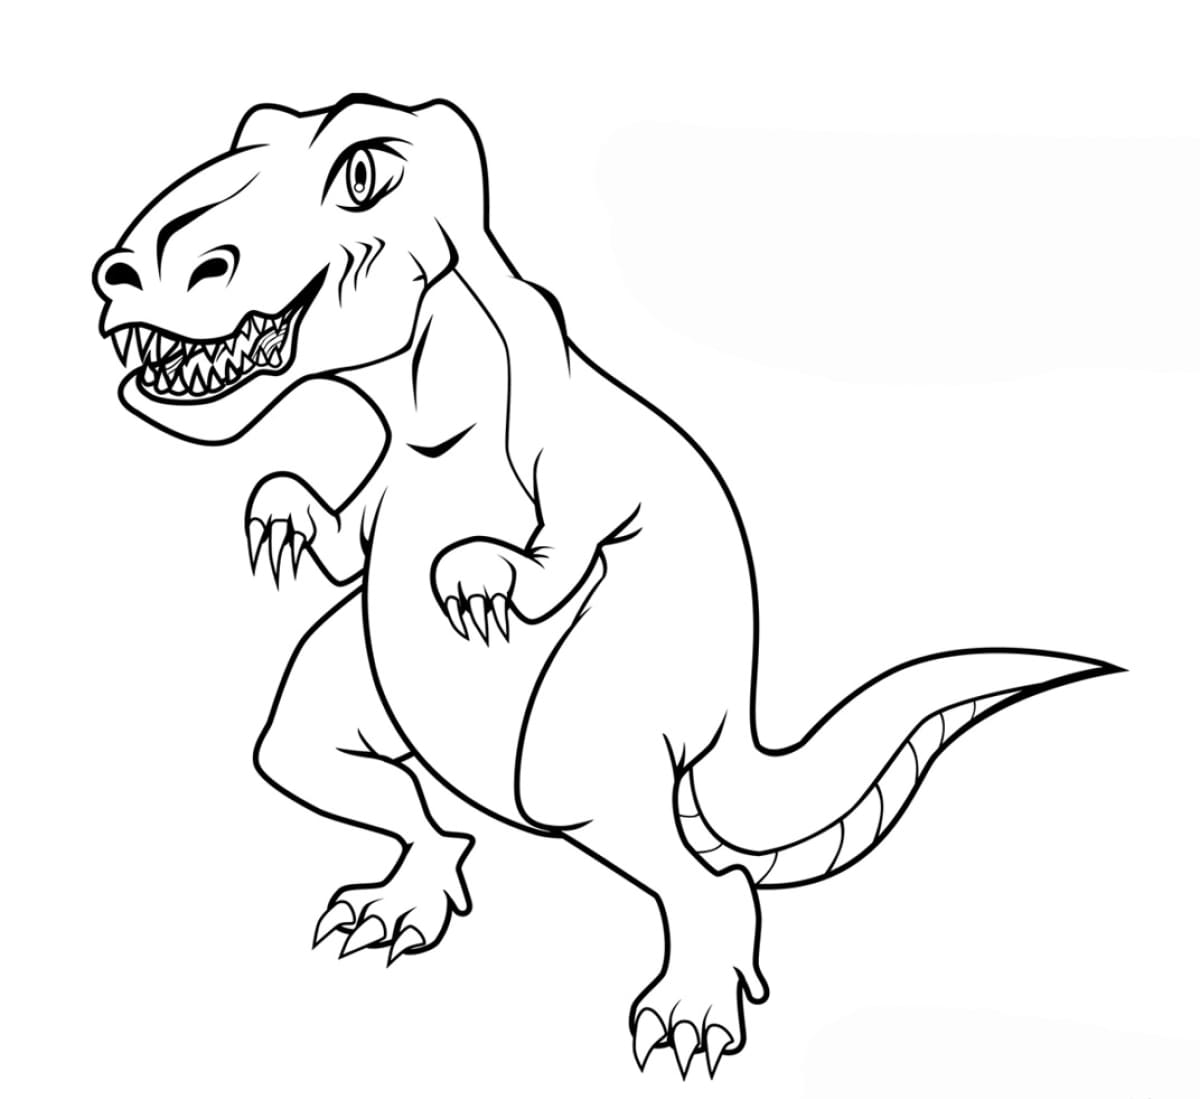 Para Colorir T-rex Dinossauro T-Rex para meninos 6-7 anos de idade